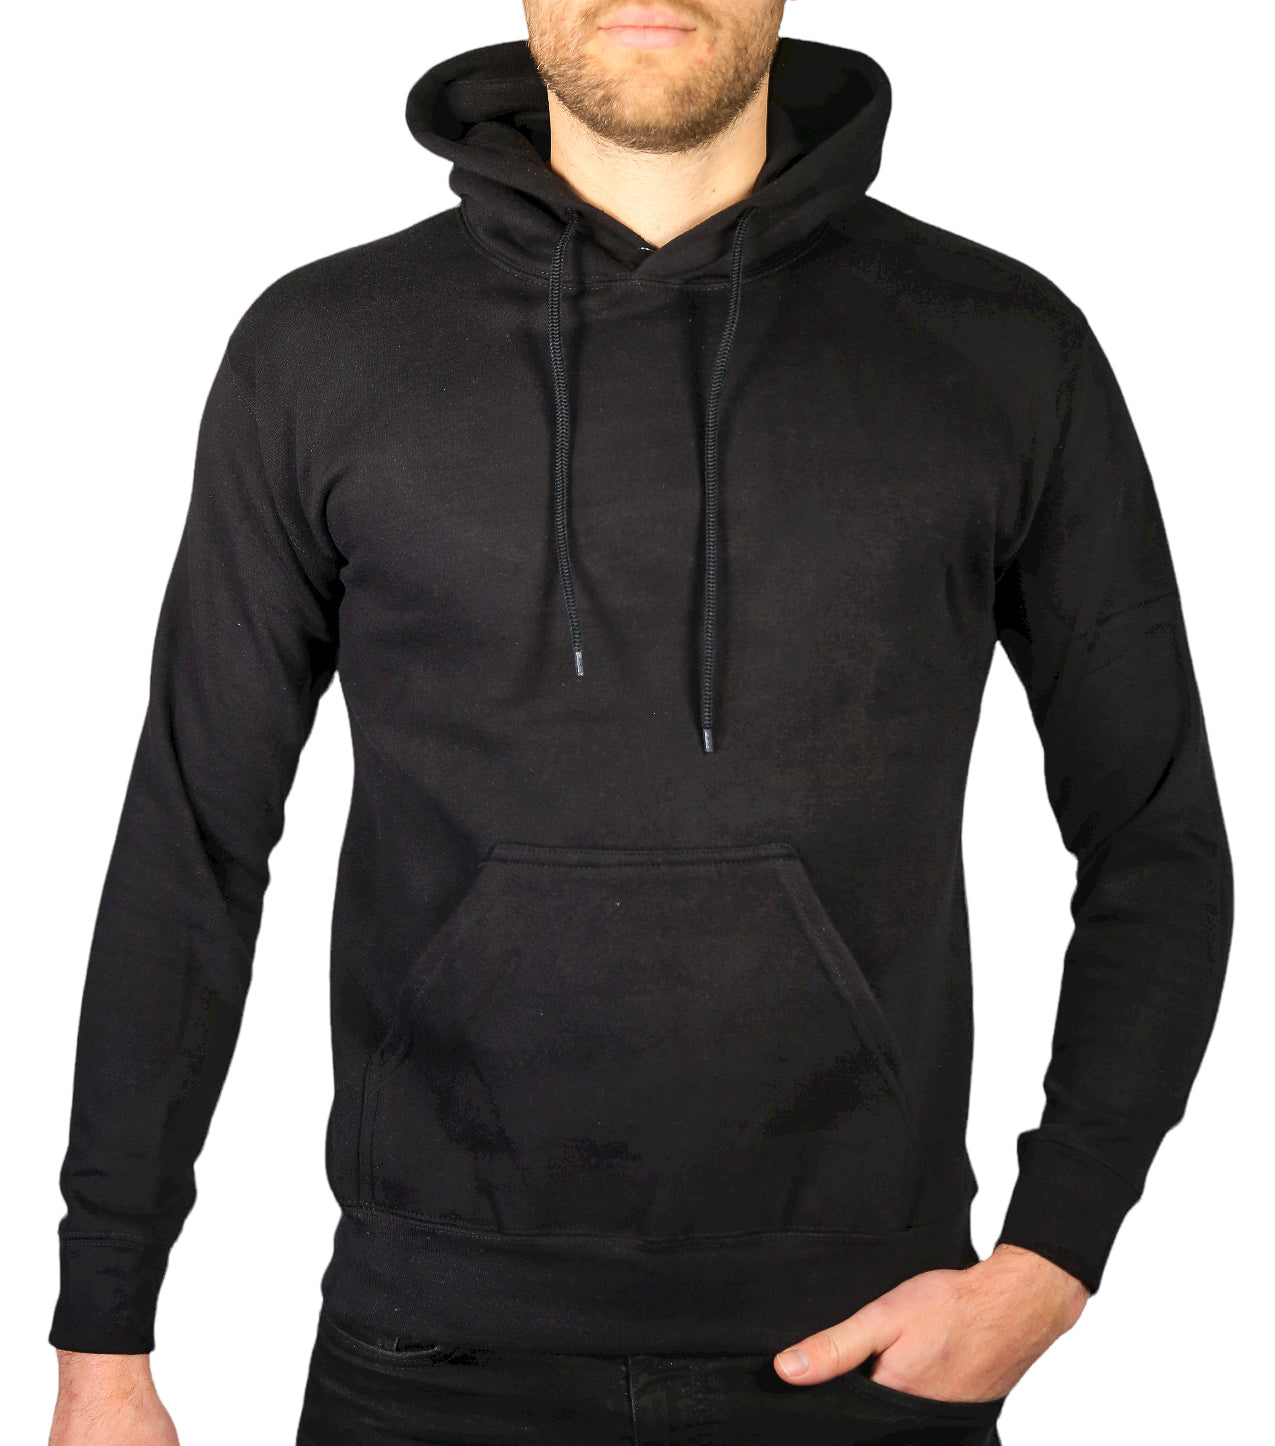 Adult Mens 100% Cotton Fleece Hoodie Jumper Pullover Sweater Warm Sweatshirt - Black - S